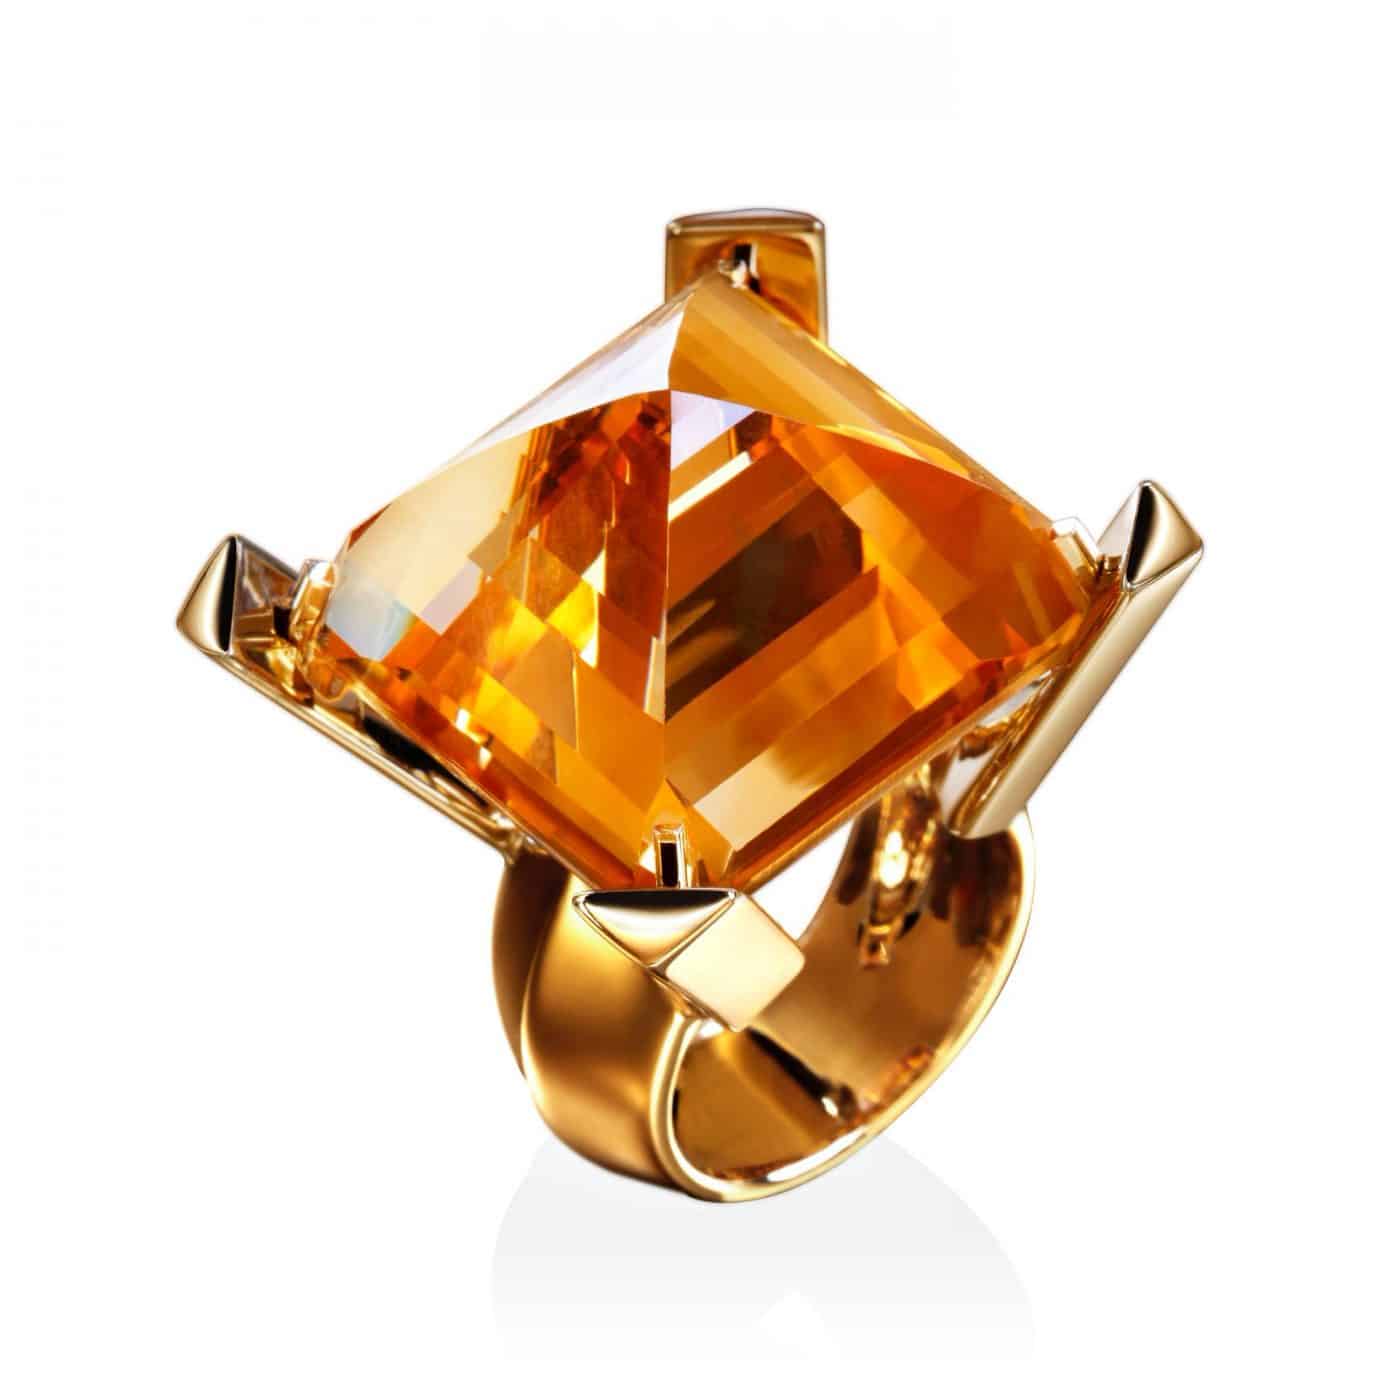 43 Carat Citrine, Cognac Diamond and 18K Gold Geometric Pyramid Ring by Édéenne